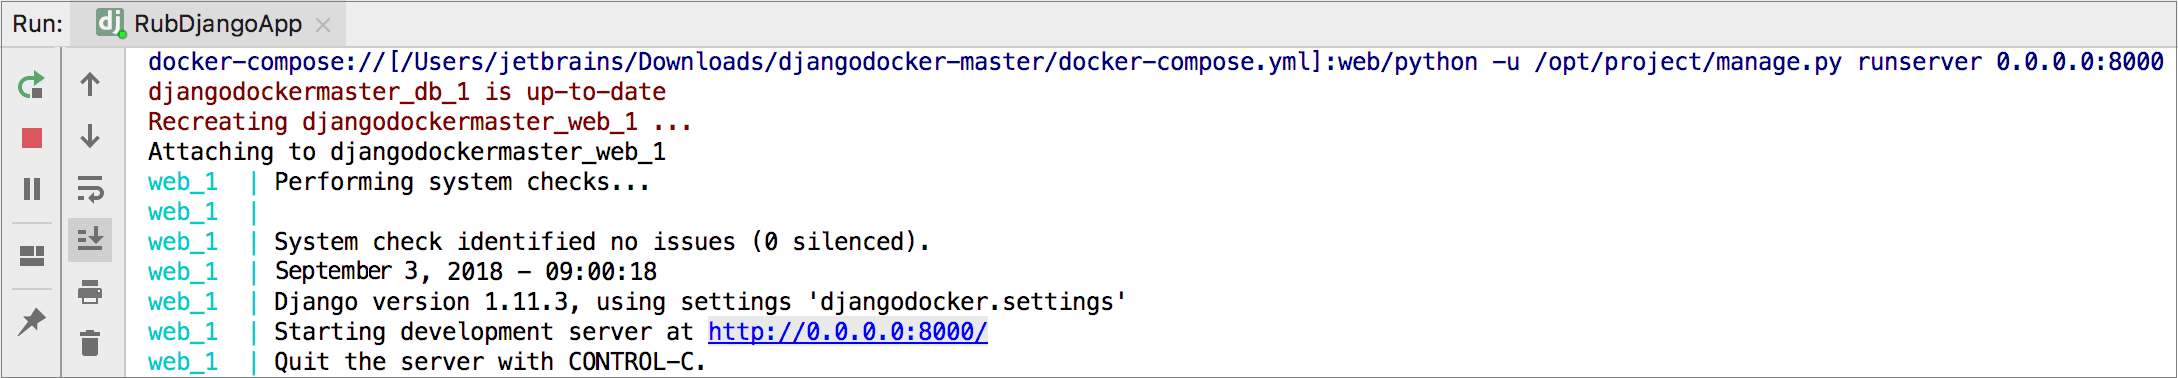 Docker compose run